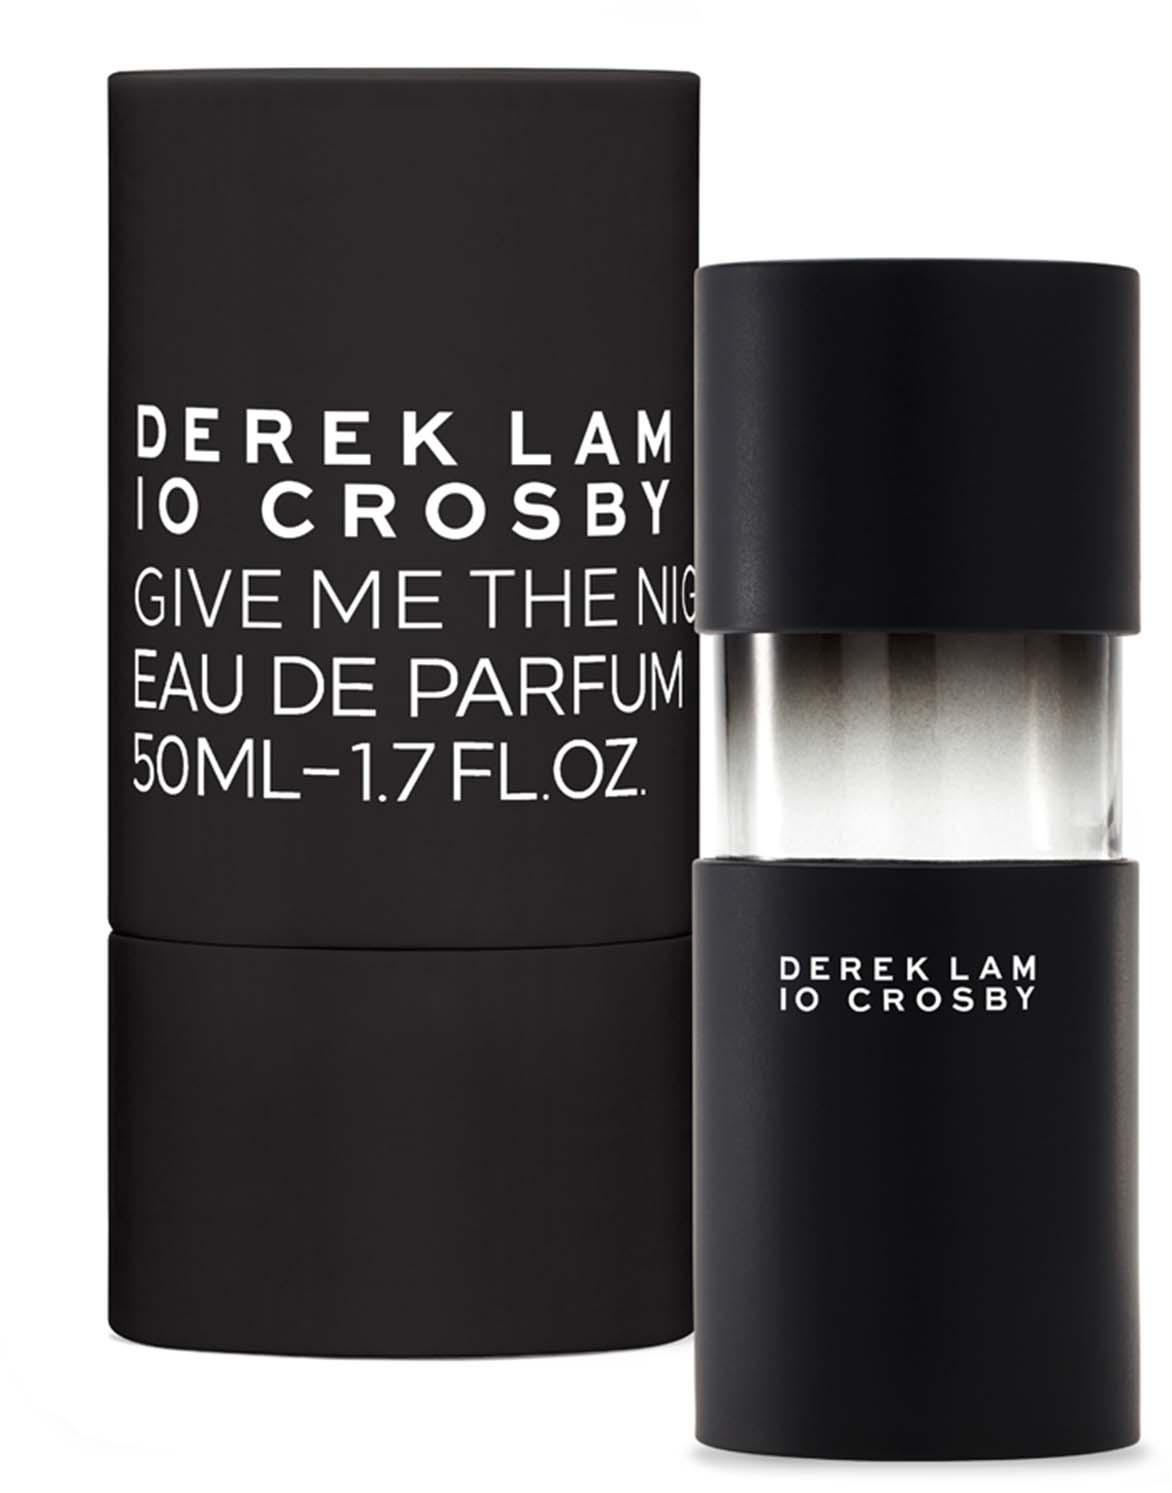 Derek Lam 10 Crosby Give Me The Night Eau de Parfum 50 ml | lyko.com